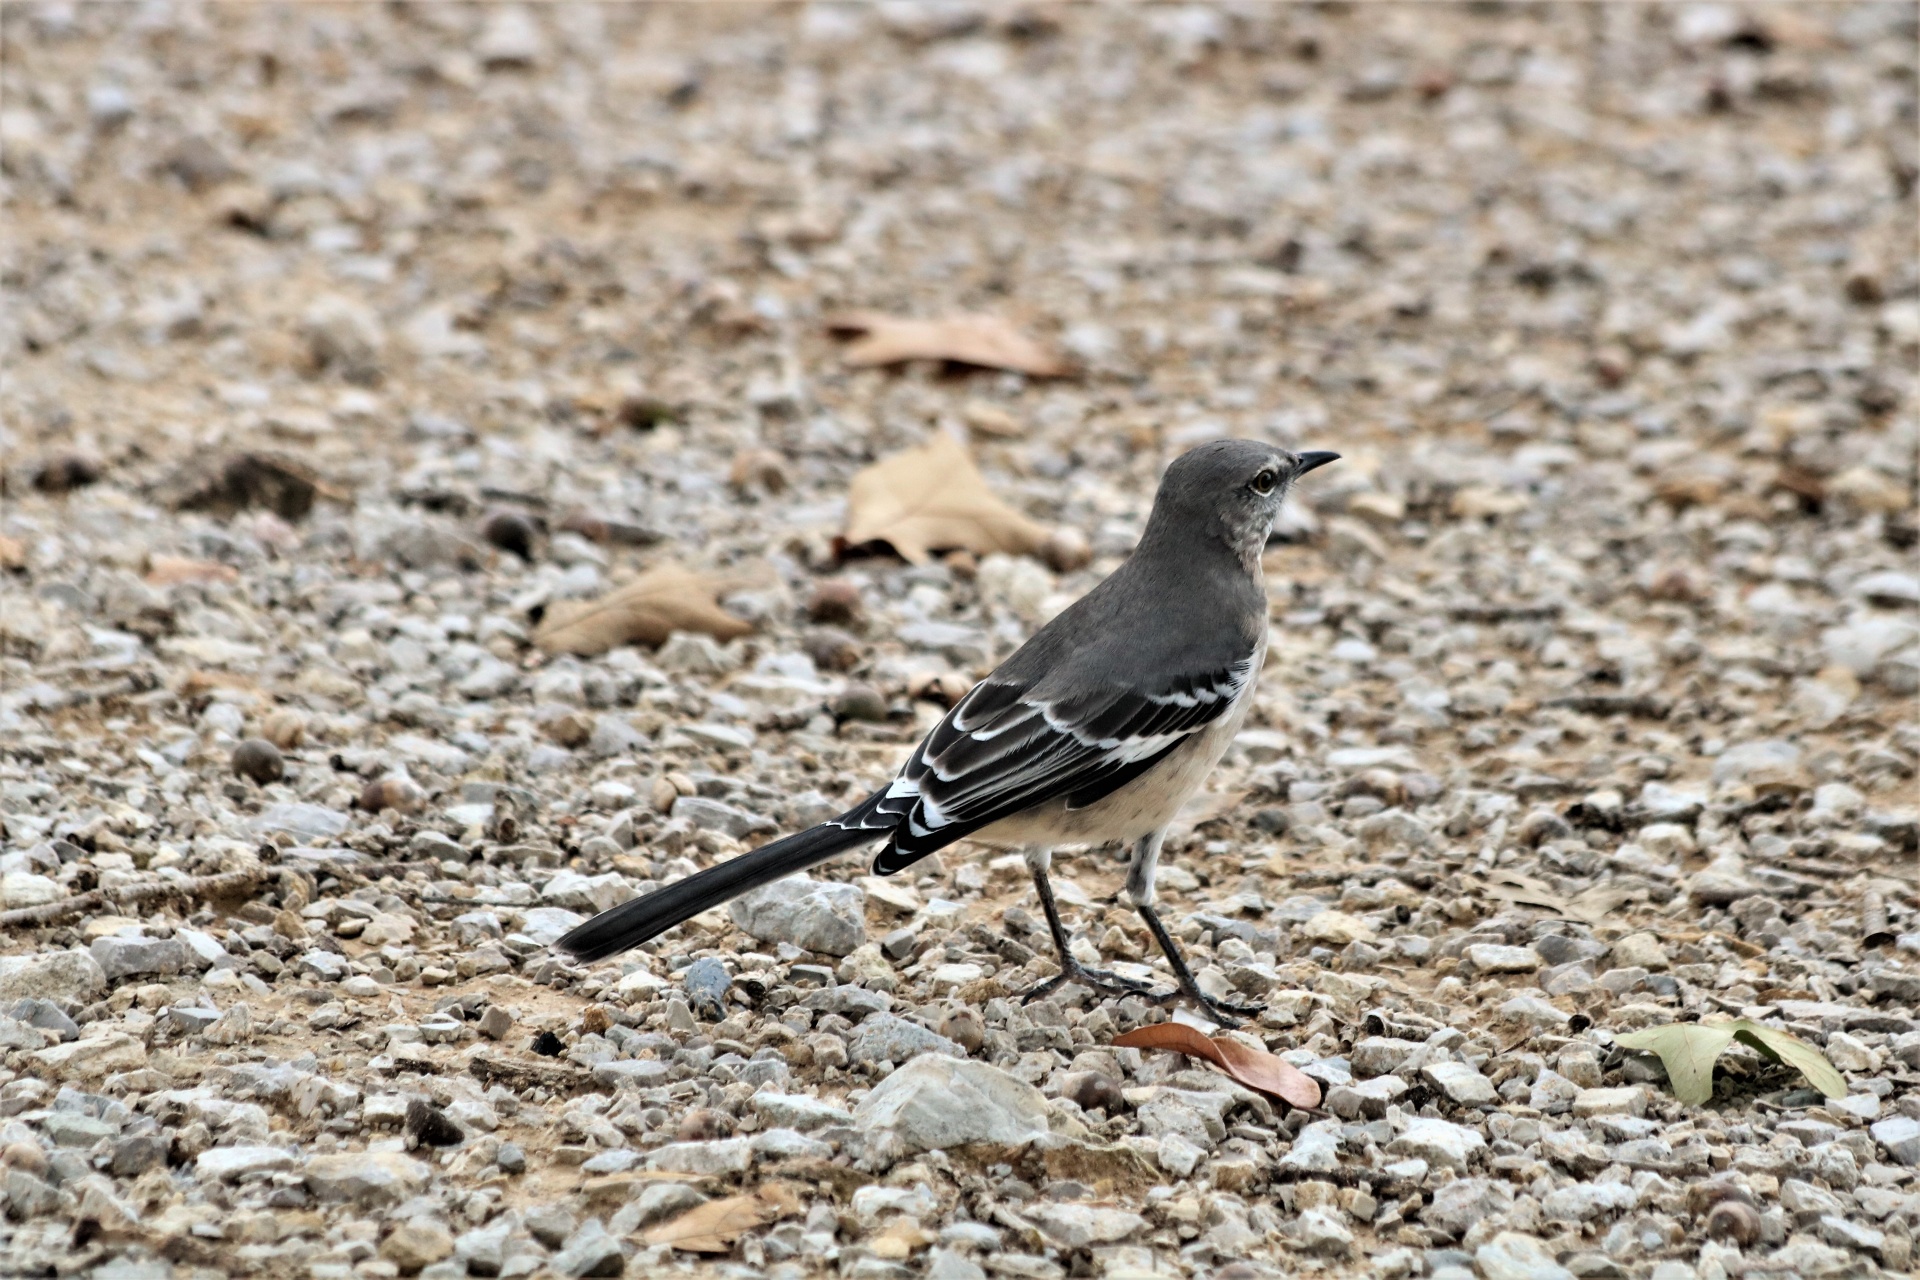 Profile of a mockingbird, standing on gravel ground.